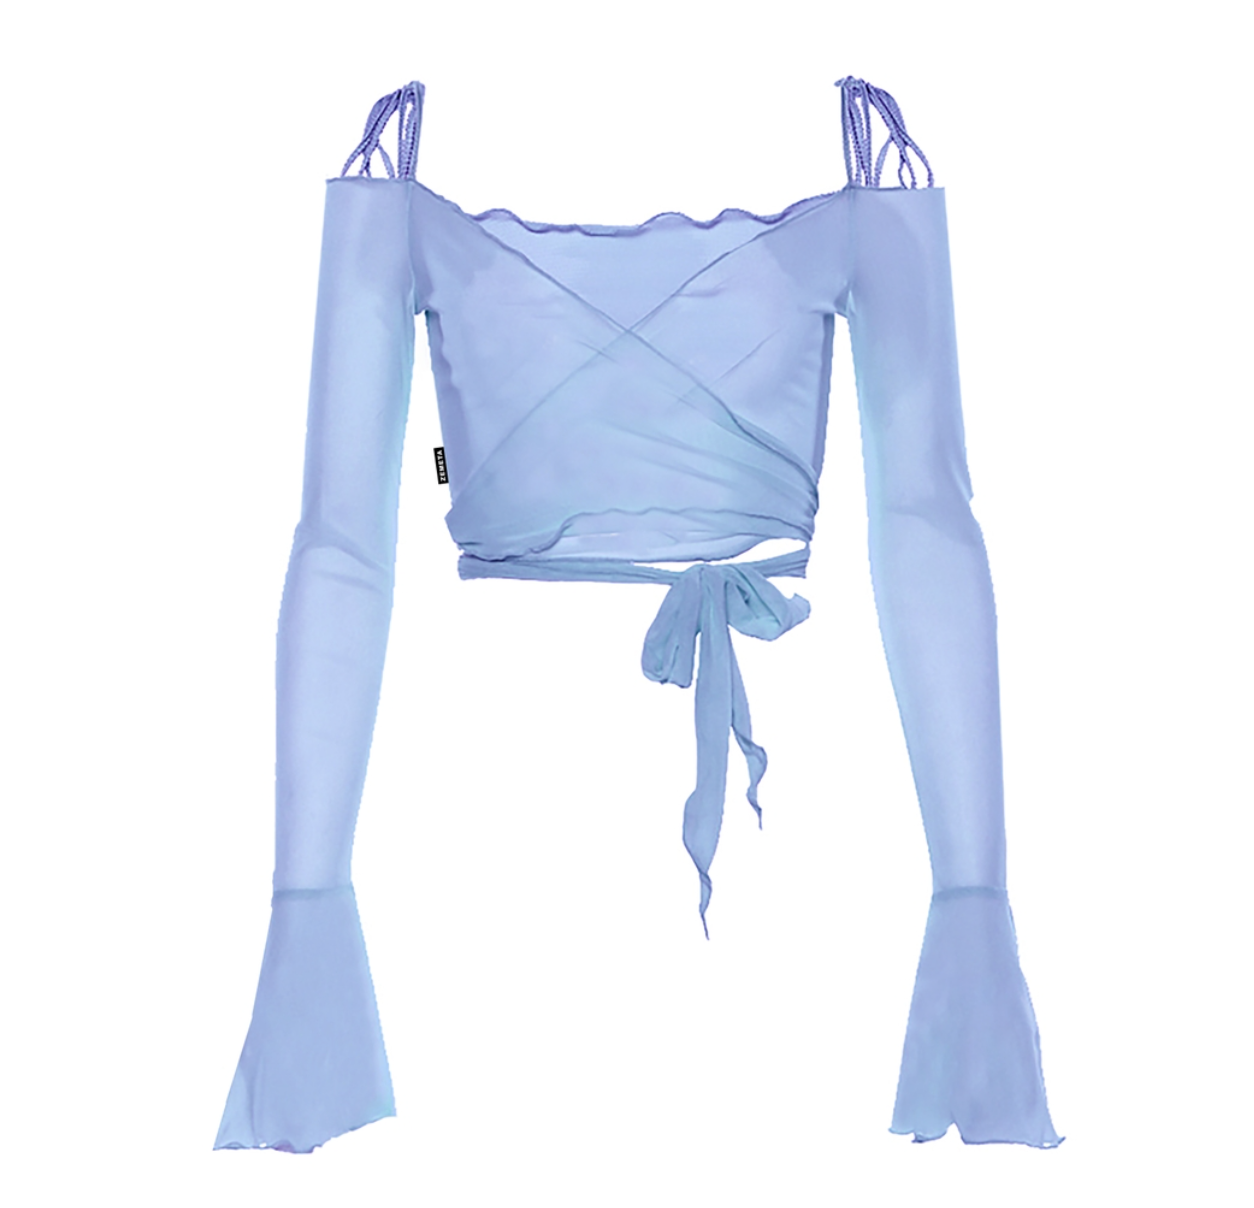 image of mesh tie-up cardigan